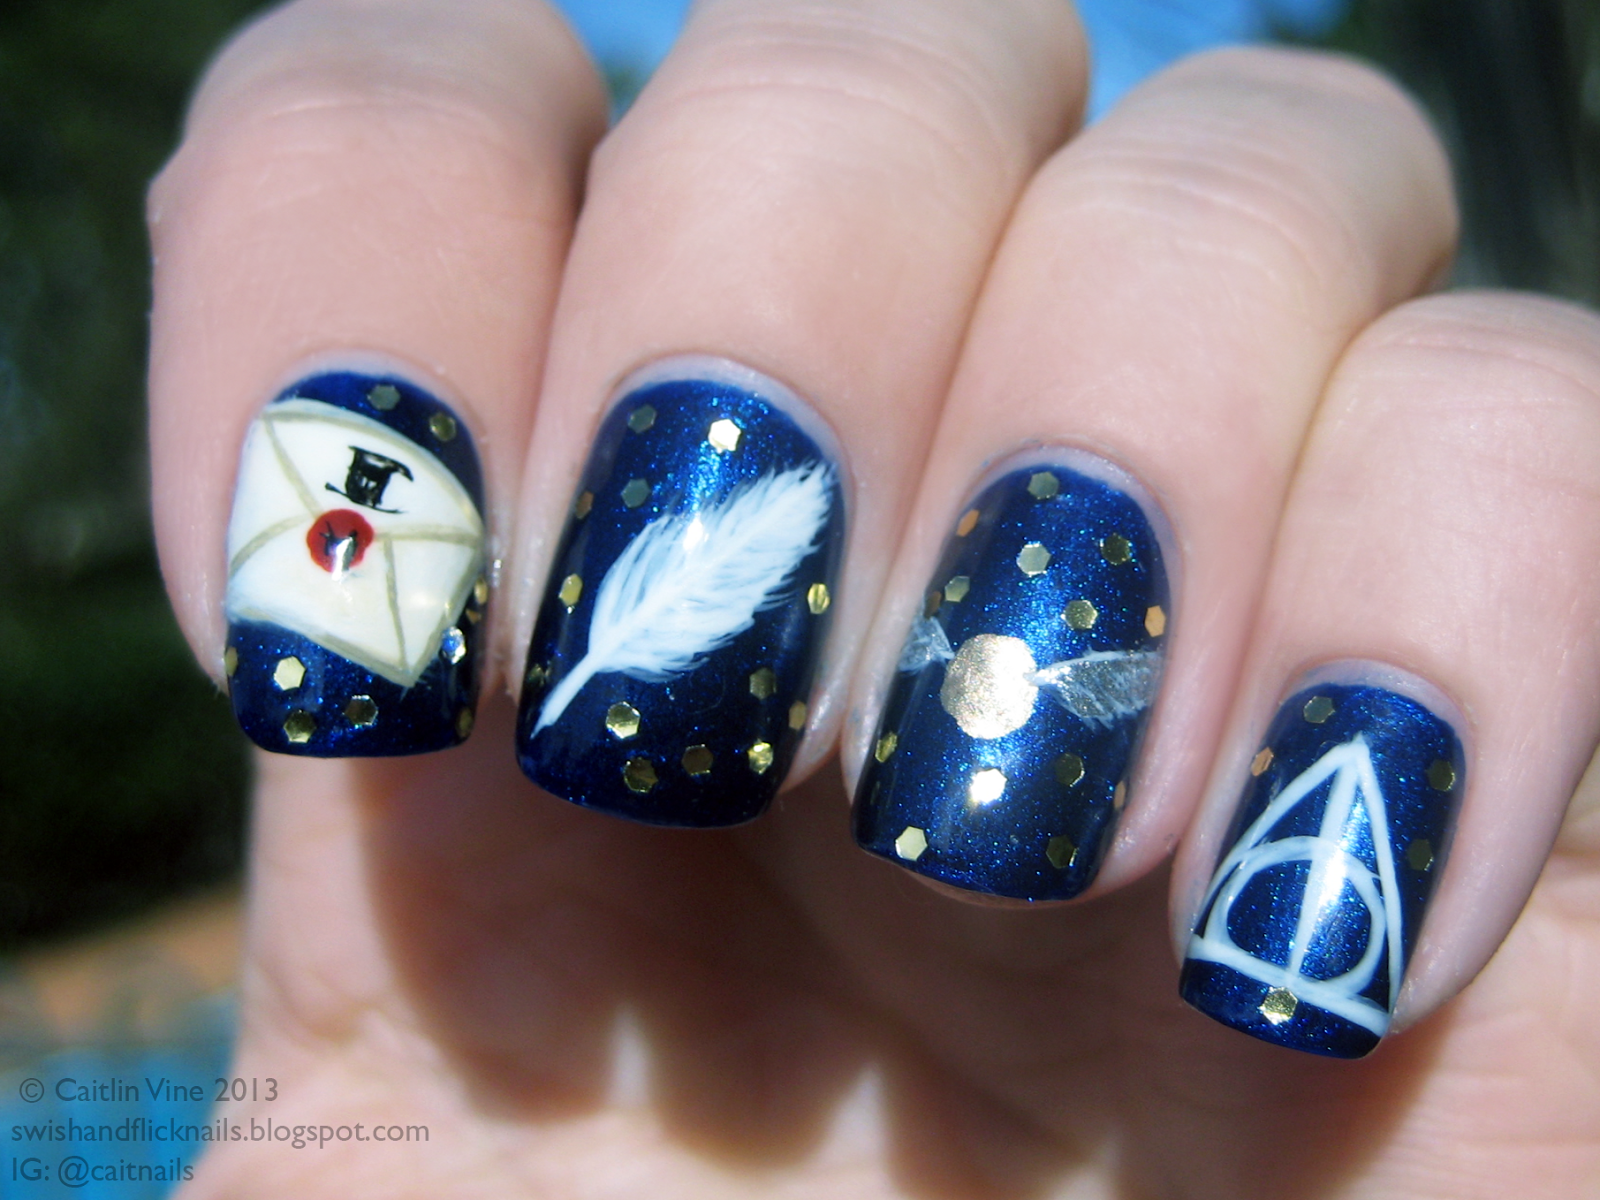 4. "Minimalist Harry Potter Nail Ideas" - wide 7